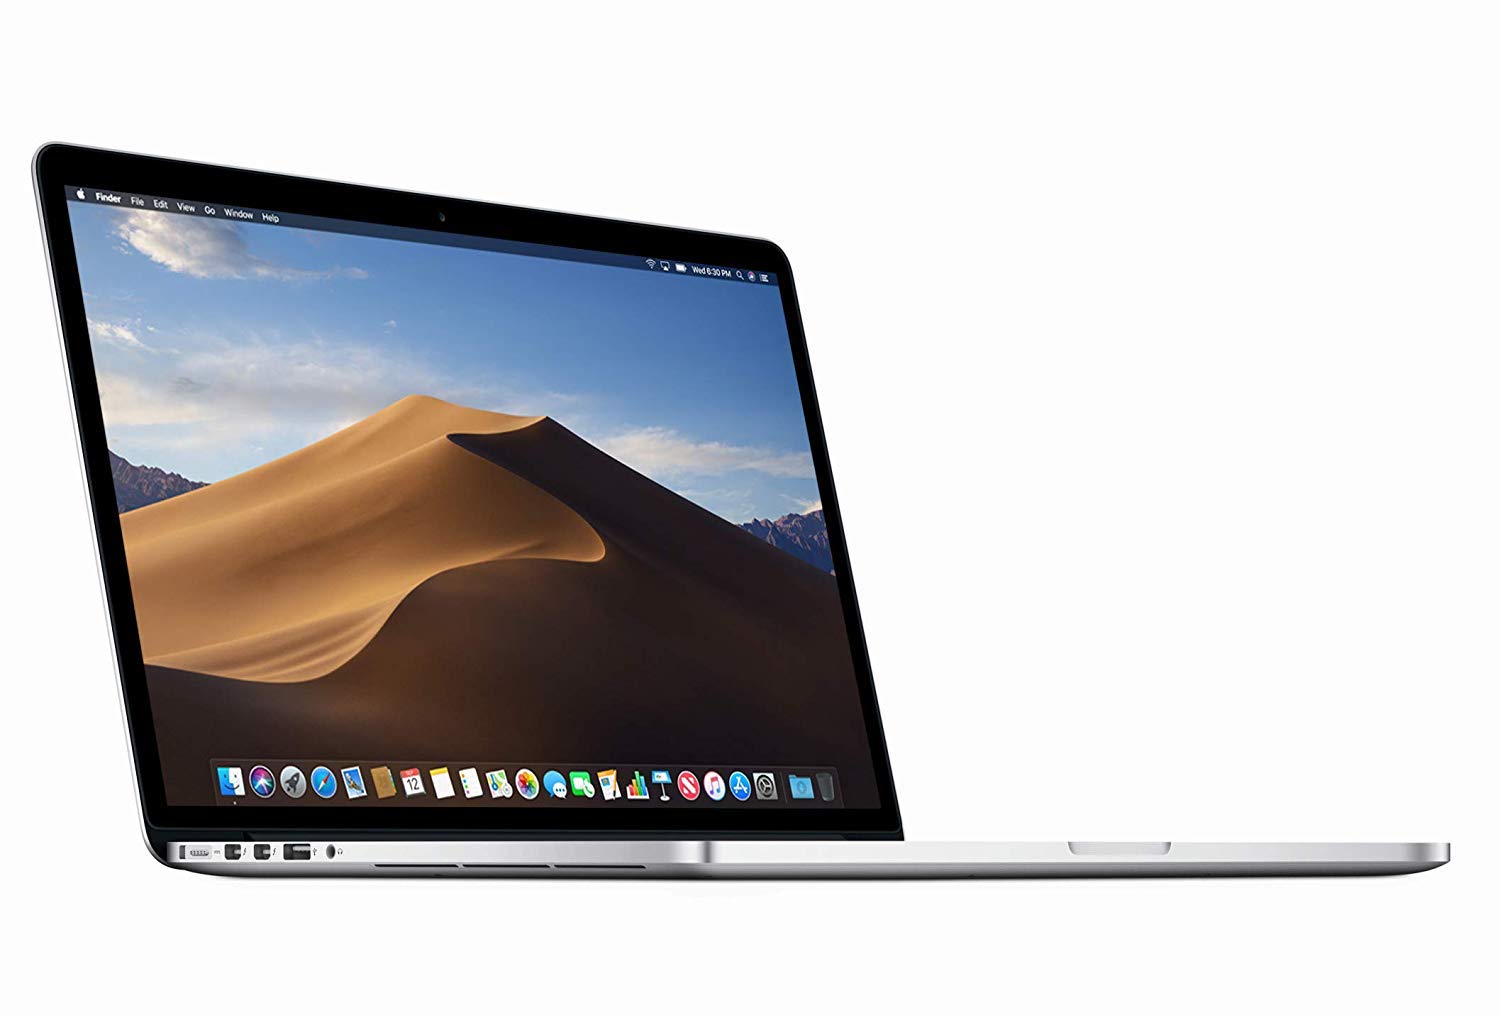  Apple MacBook Pro 15-inç Retina Display (Mid 2015) Notebook